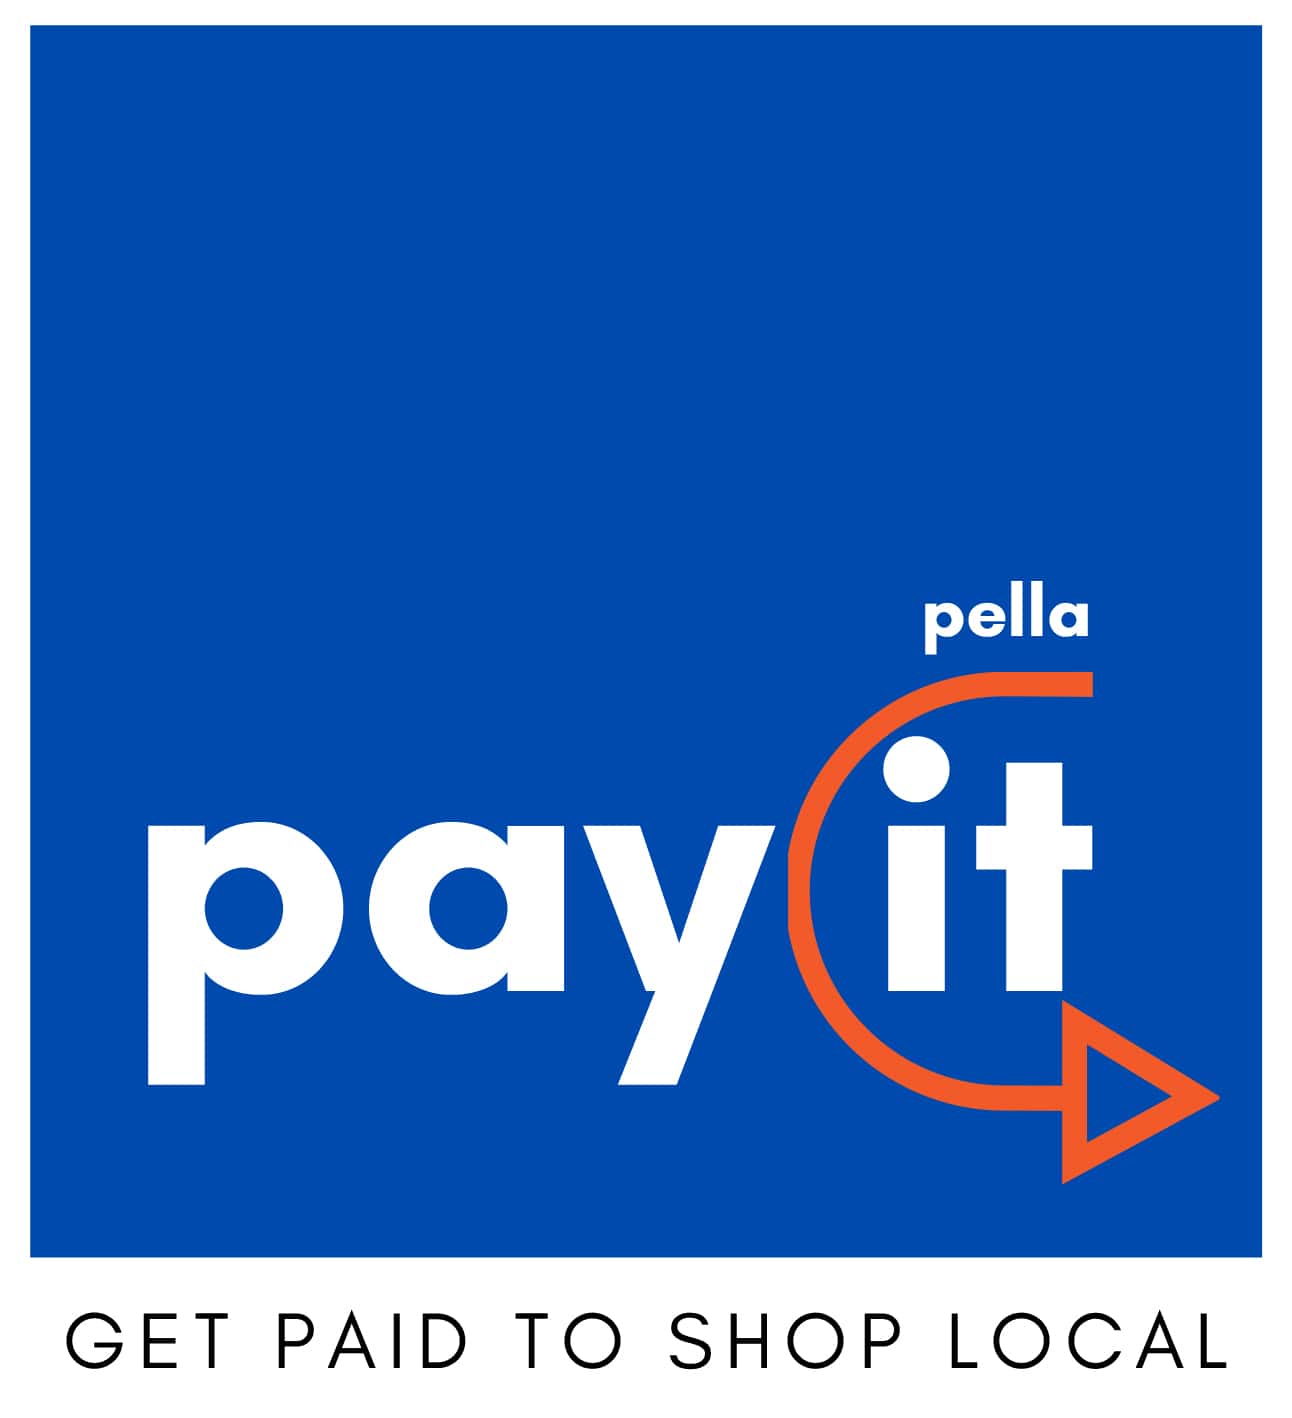 pay-it-forward-pella-logo